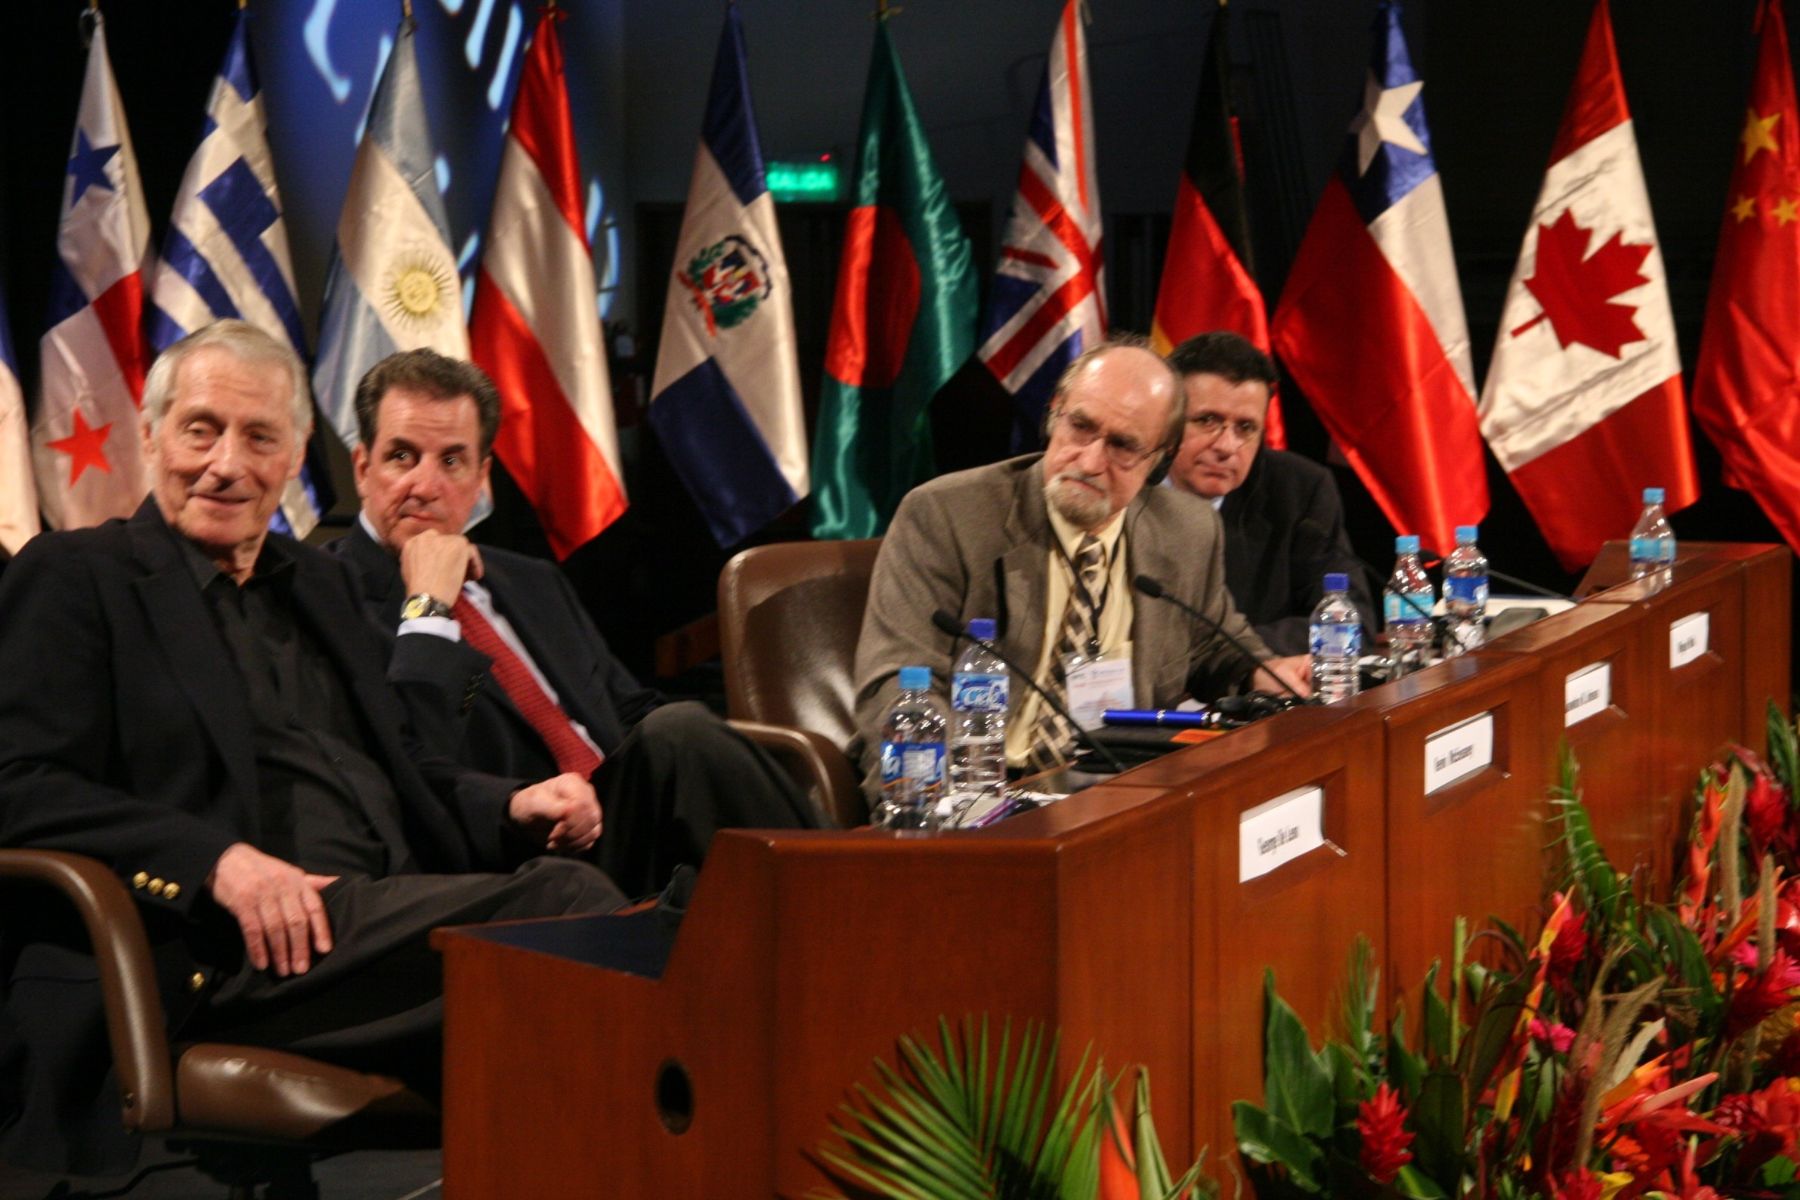 XIV Conferencia Mundial de Comunidades Terapéuticas se desarrolla en Lima